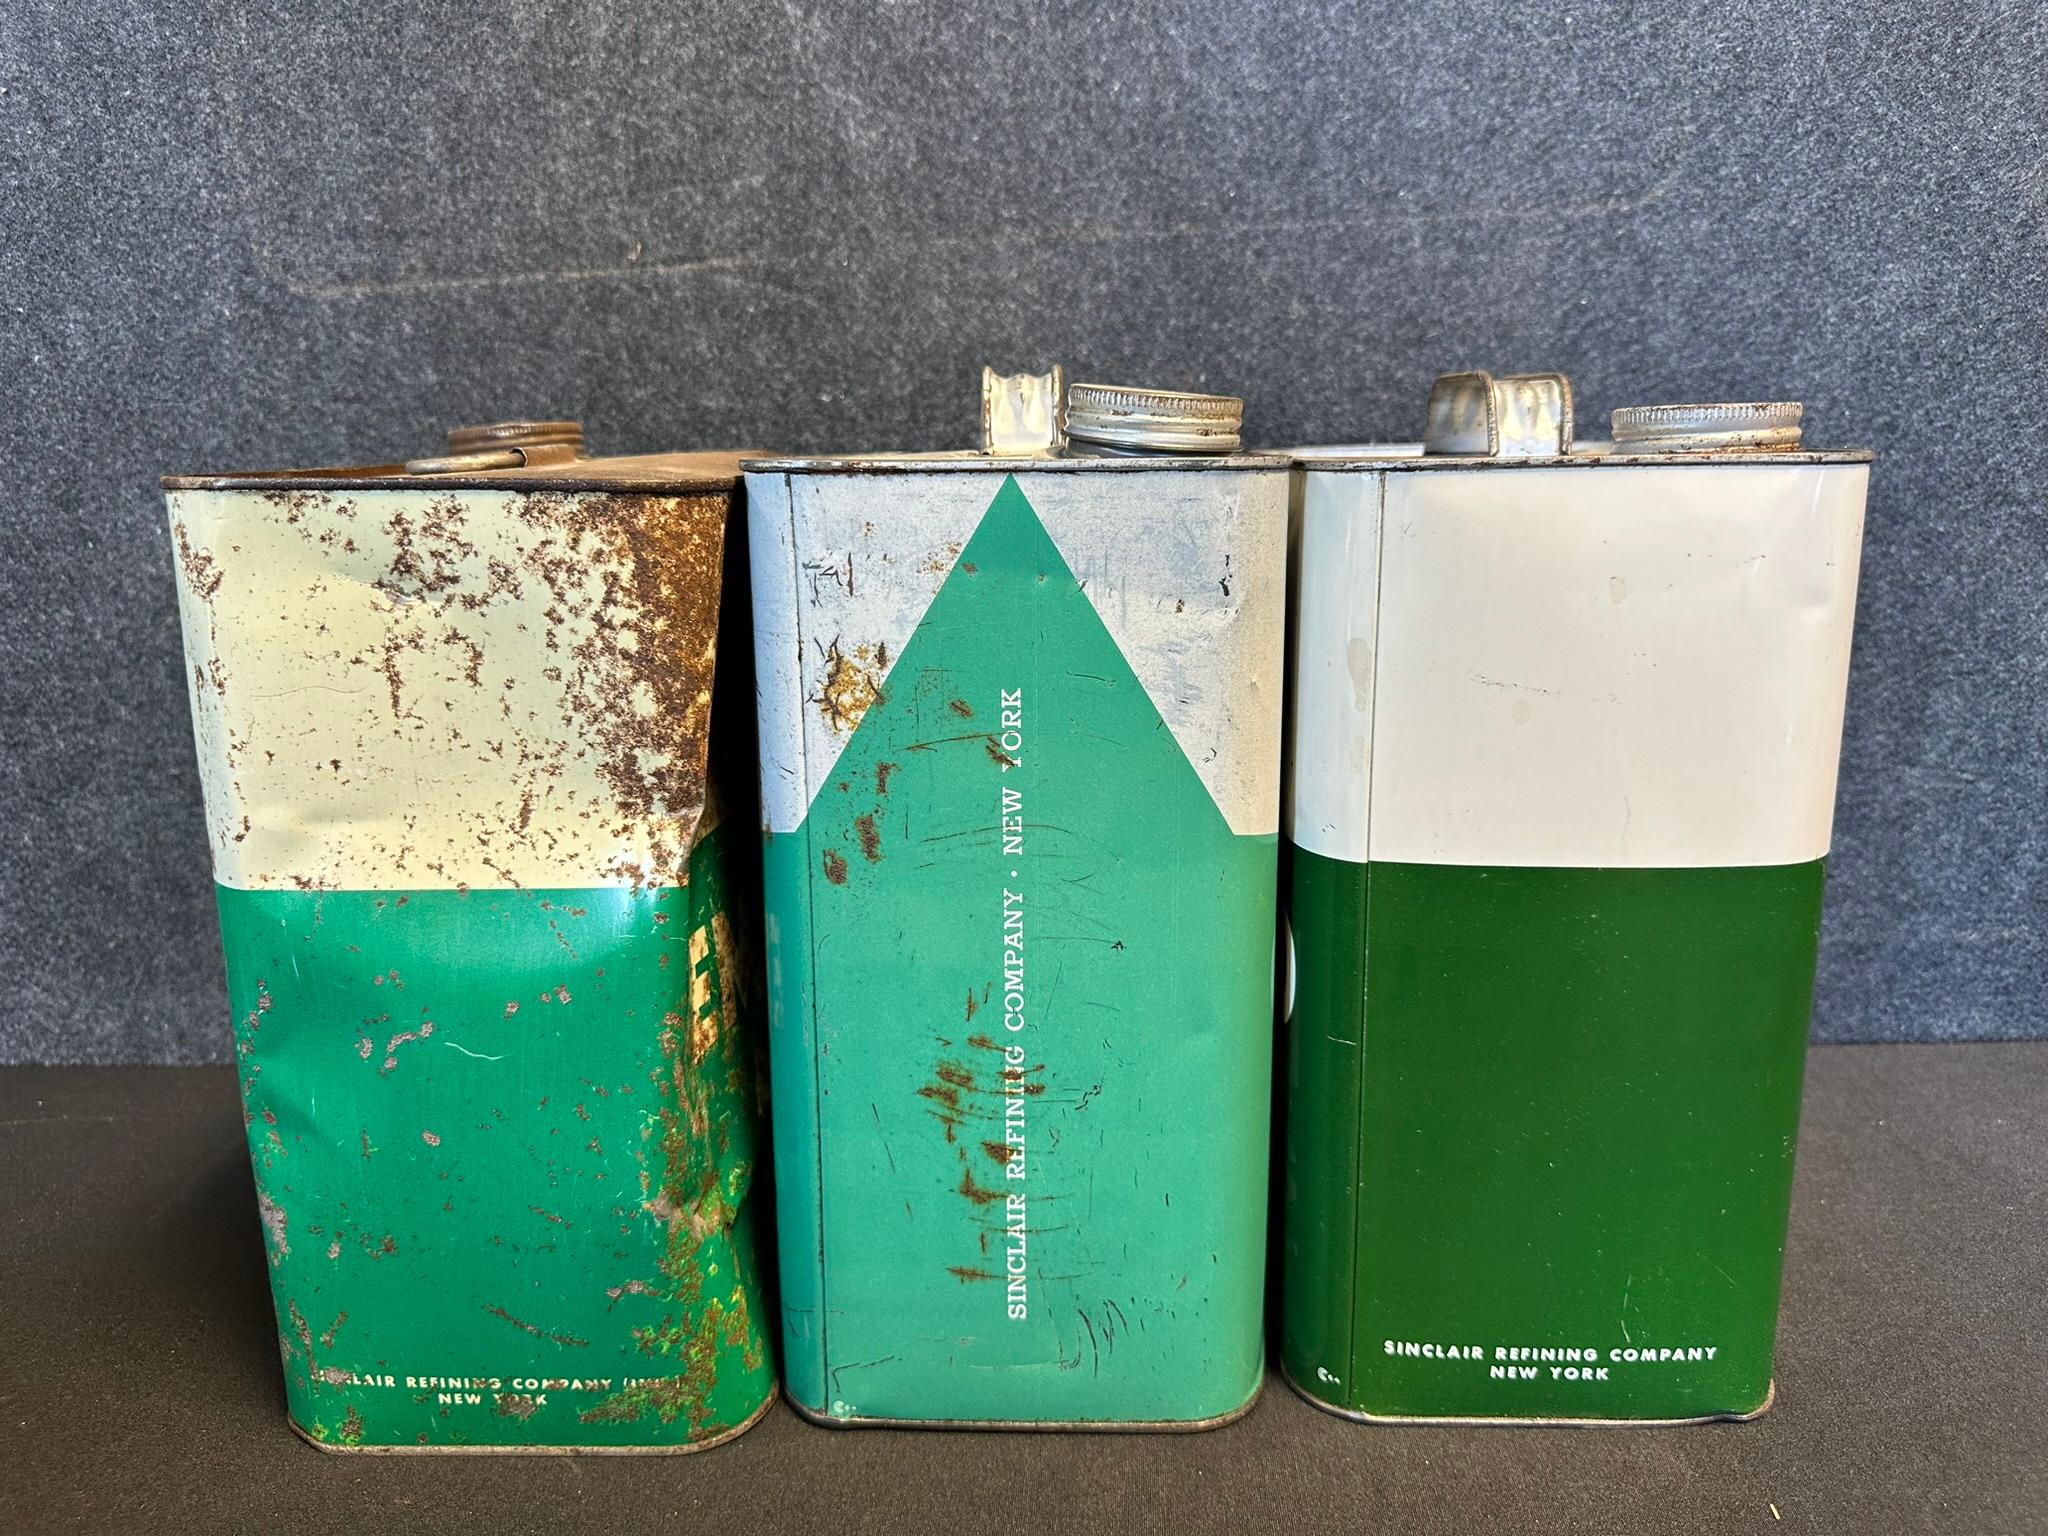 Lot 3 Original Sinclair Emerald Auto Oil 2 Gallon Motor Oil Cans